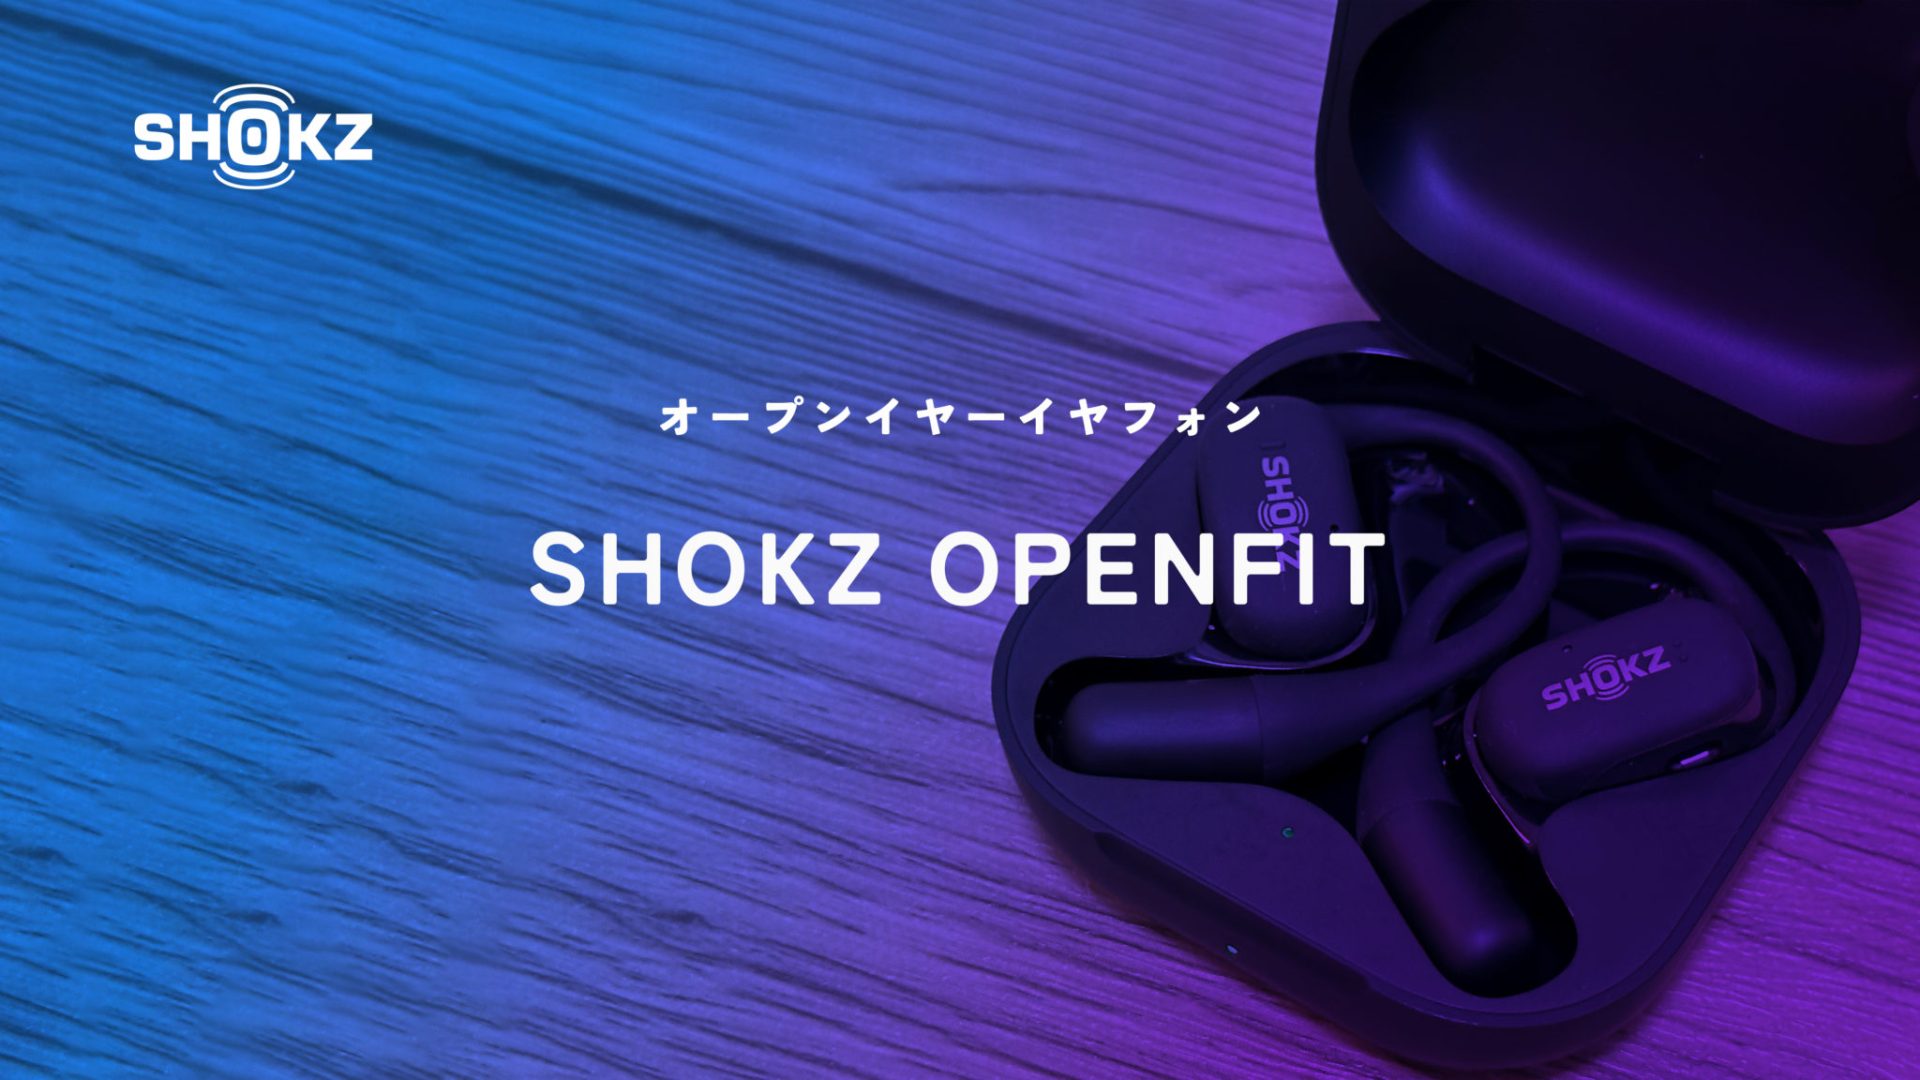 Shokz OpenFitがついに届いた！待望のオープンイヤーイヤフォンを早速レビュー